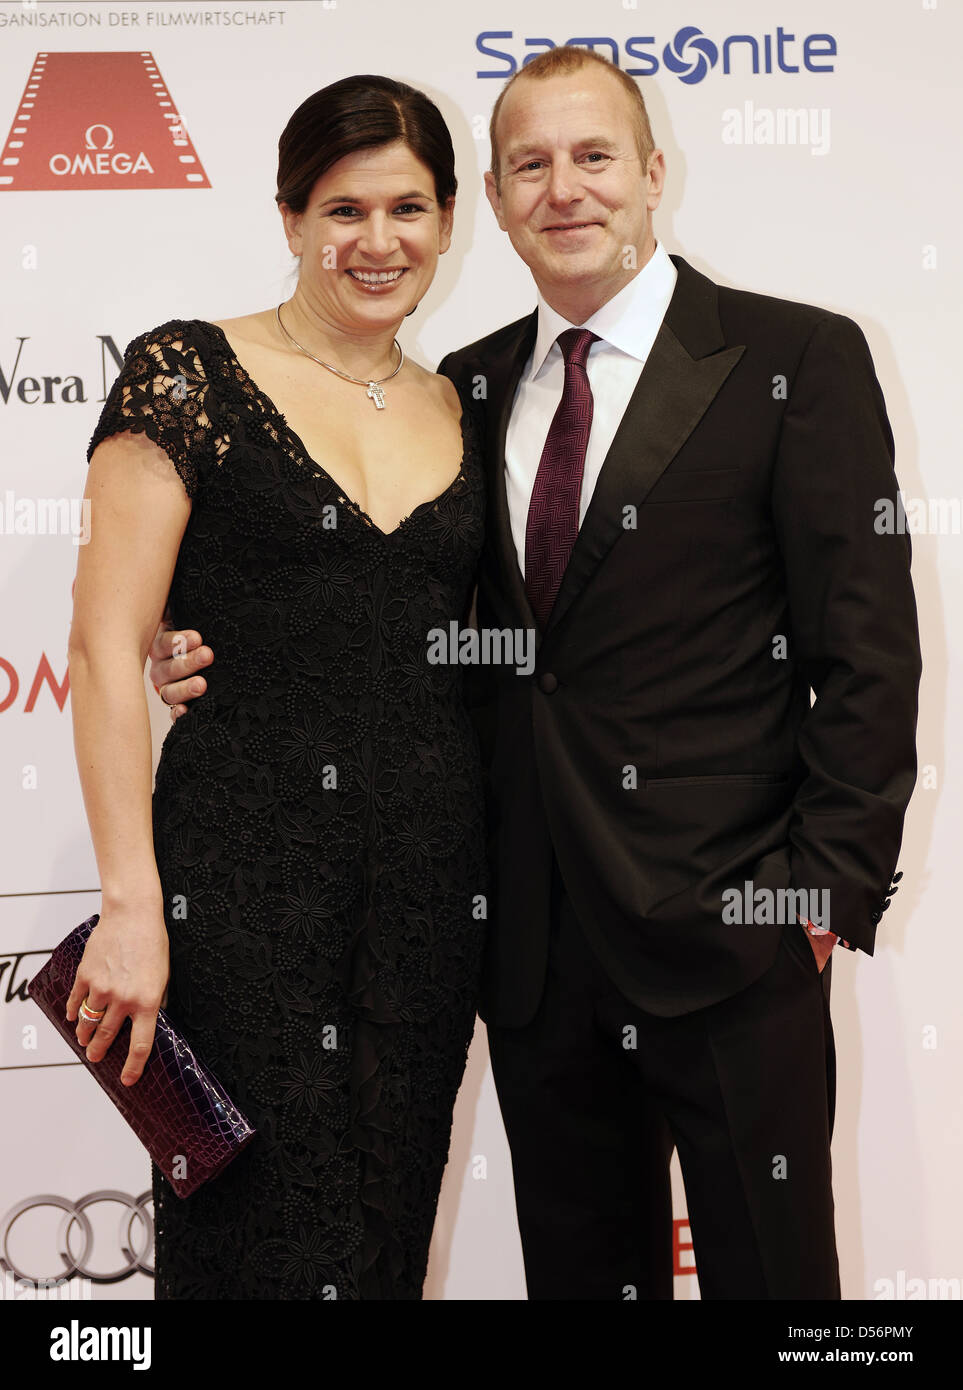 Heino Ferch and his wife Marie-Jeanette at 39th Deutscher Filmball at Hotel Bayerischer Hof. Munich, Germany - 21.01.2012 Stock Photo